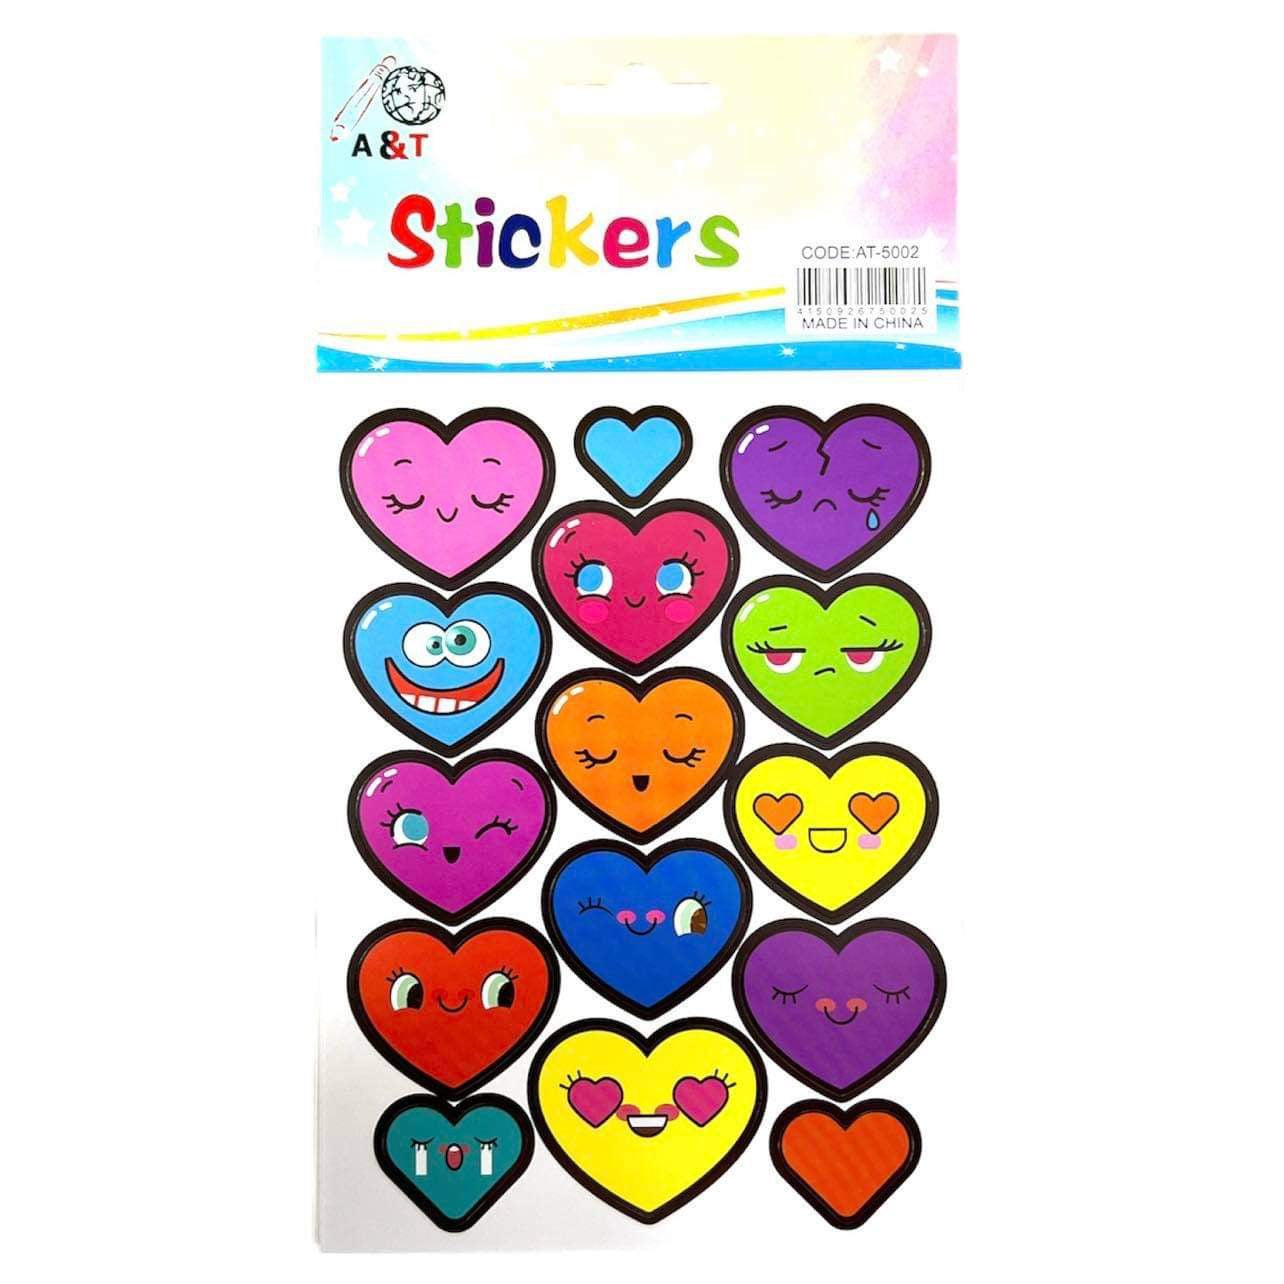 A&T Stickers Colored Hearts || ستيكرز أطلس قلوب ملونة